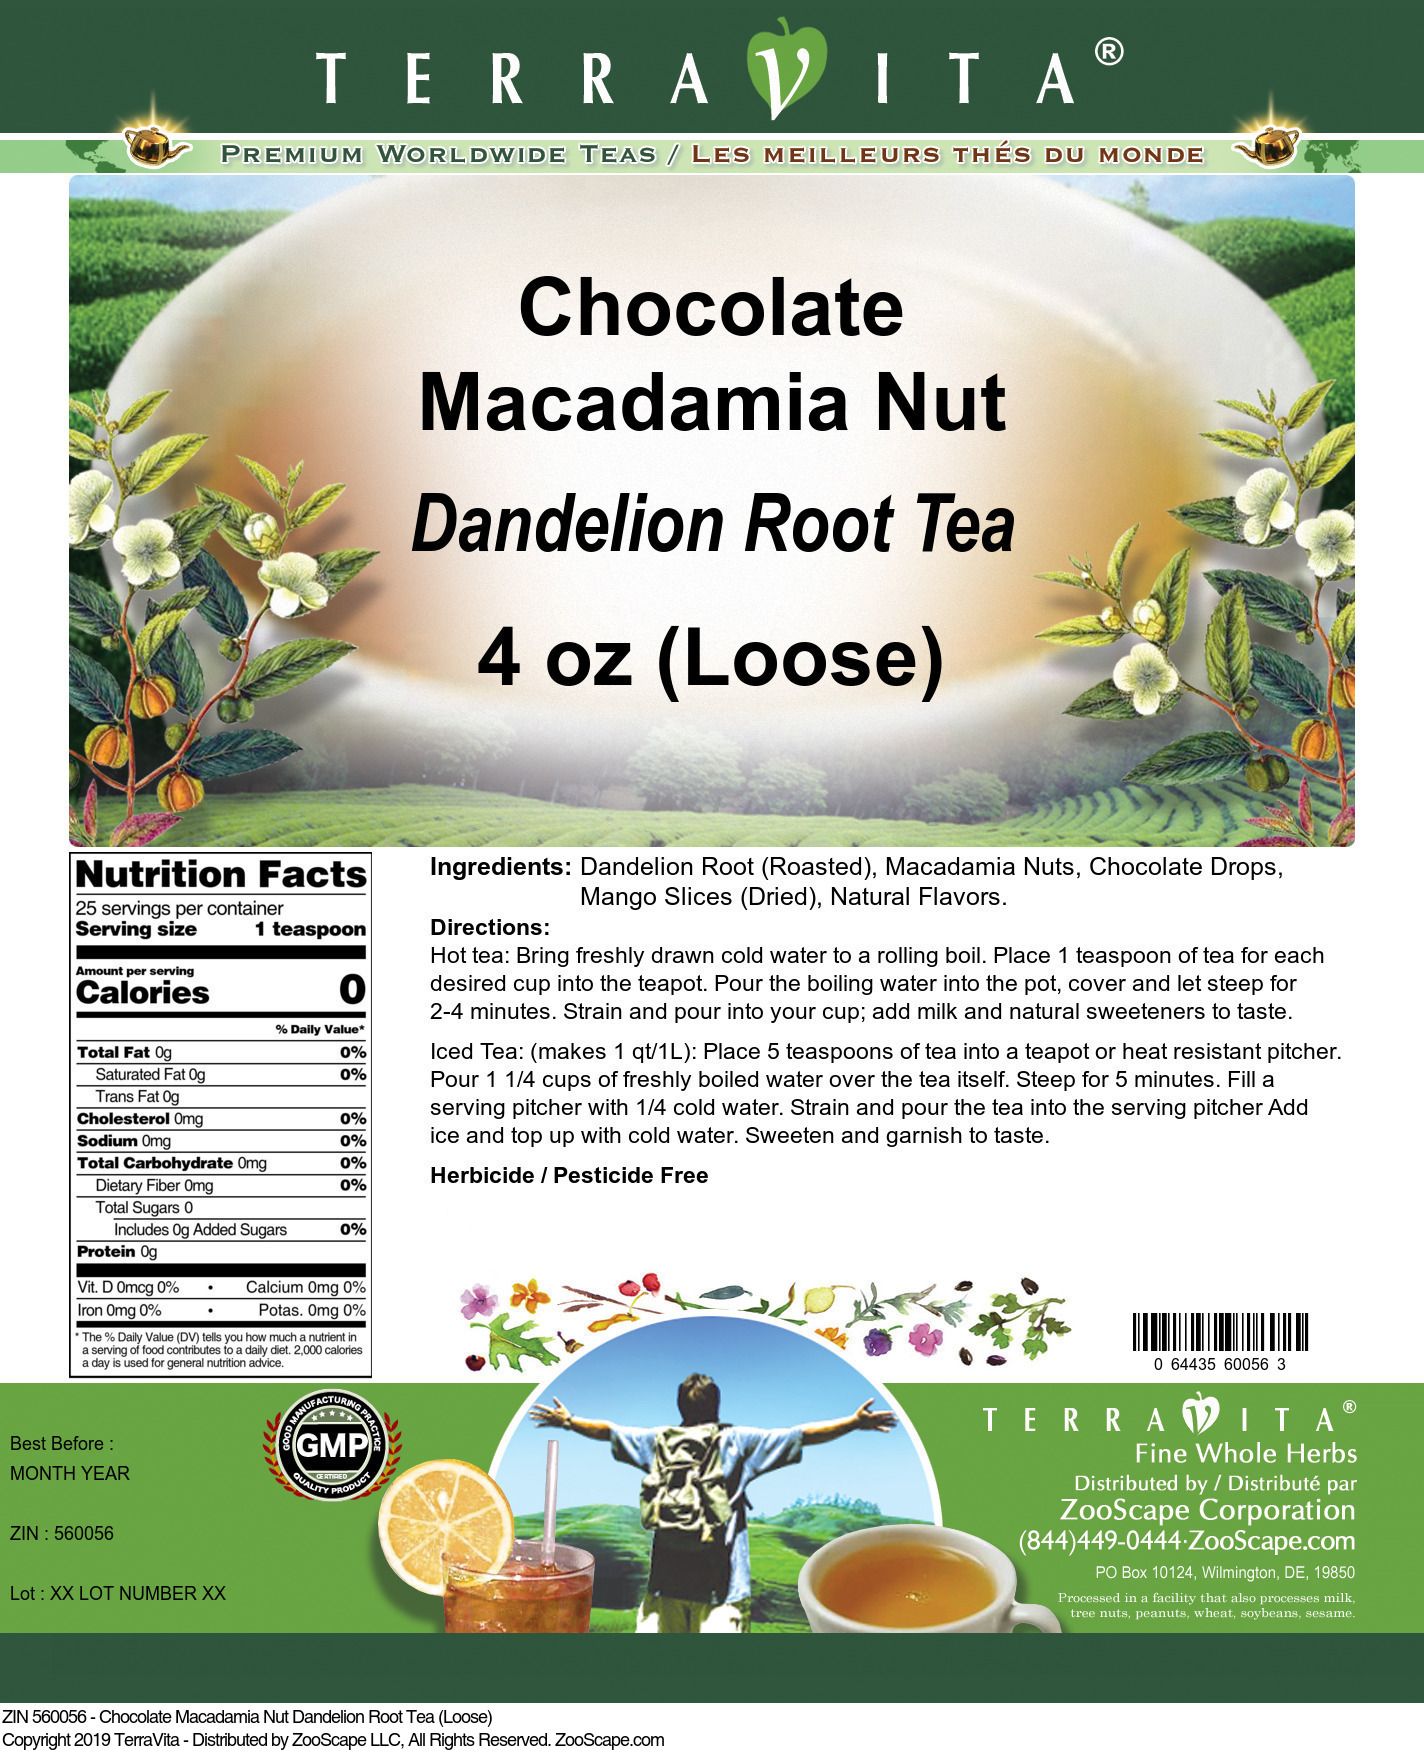 Chocolate Macadamia Nut Dandelion Root Tea (Loose) - Label